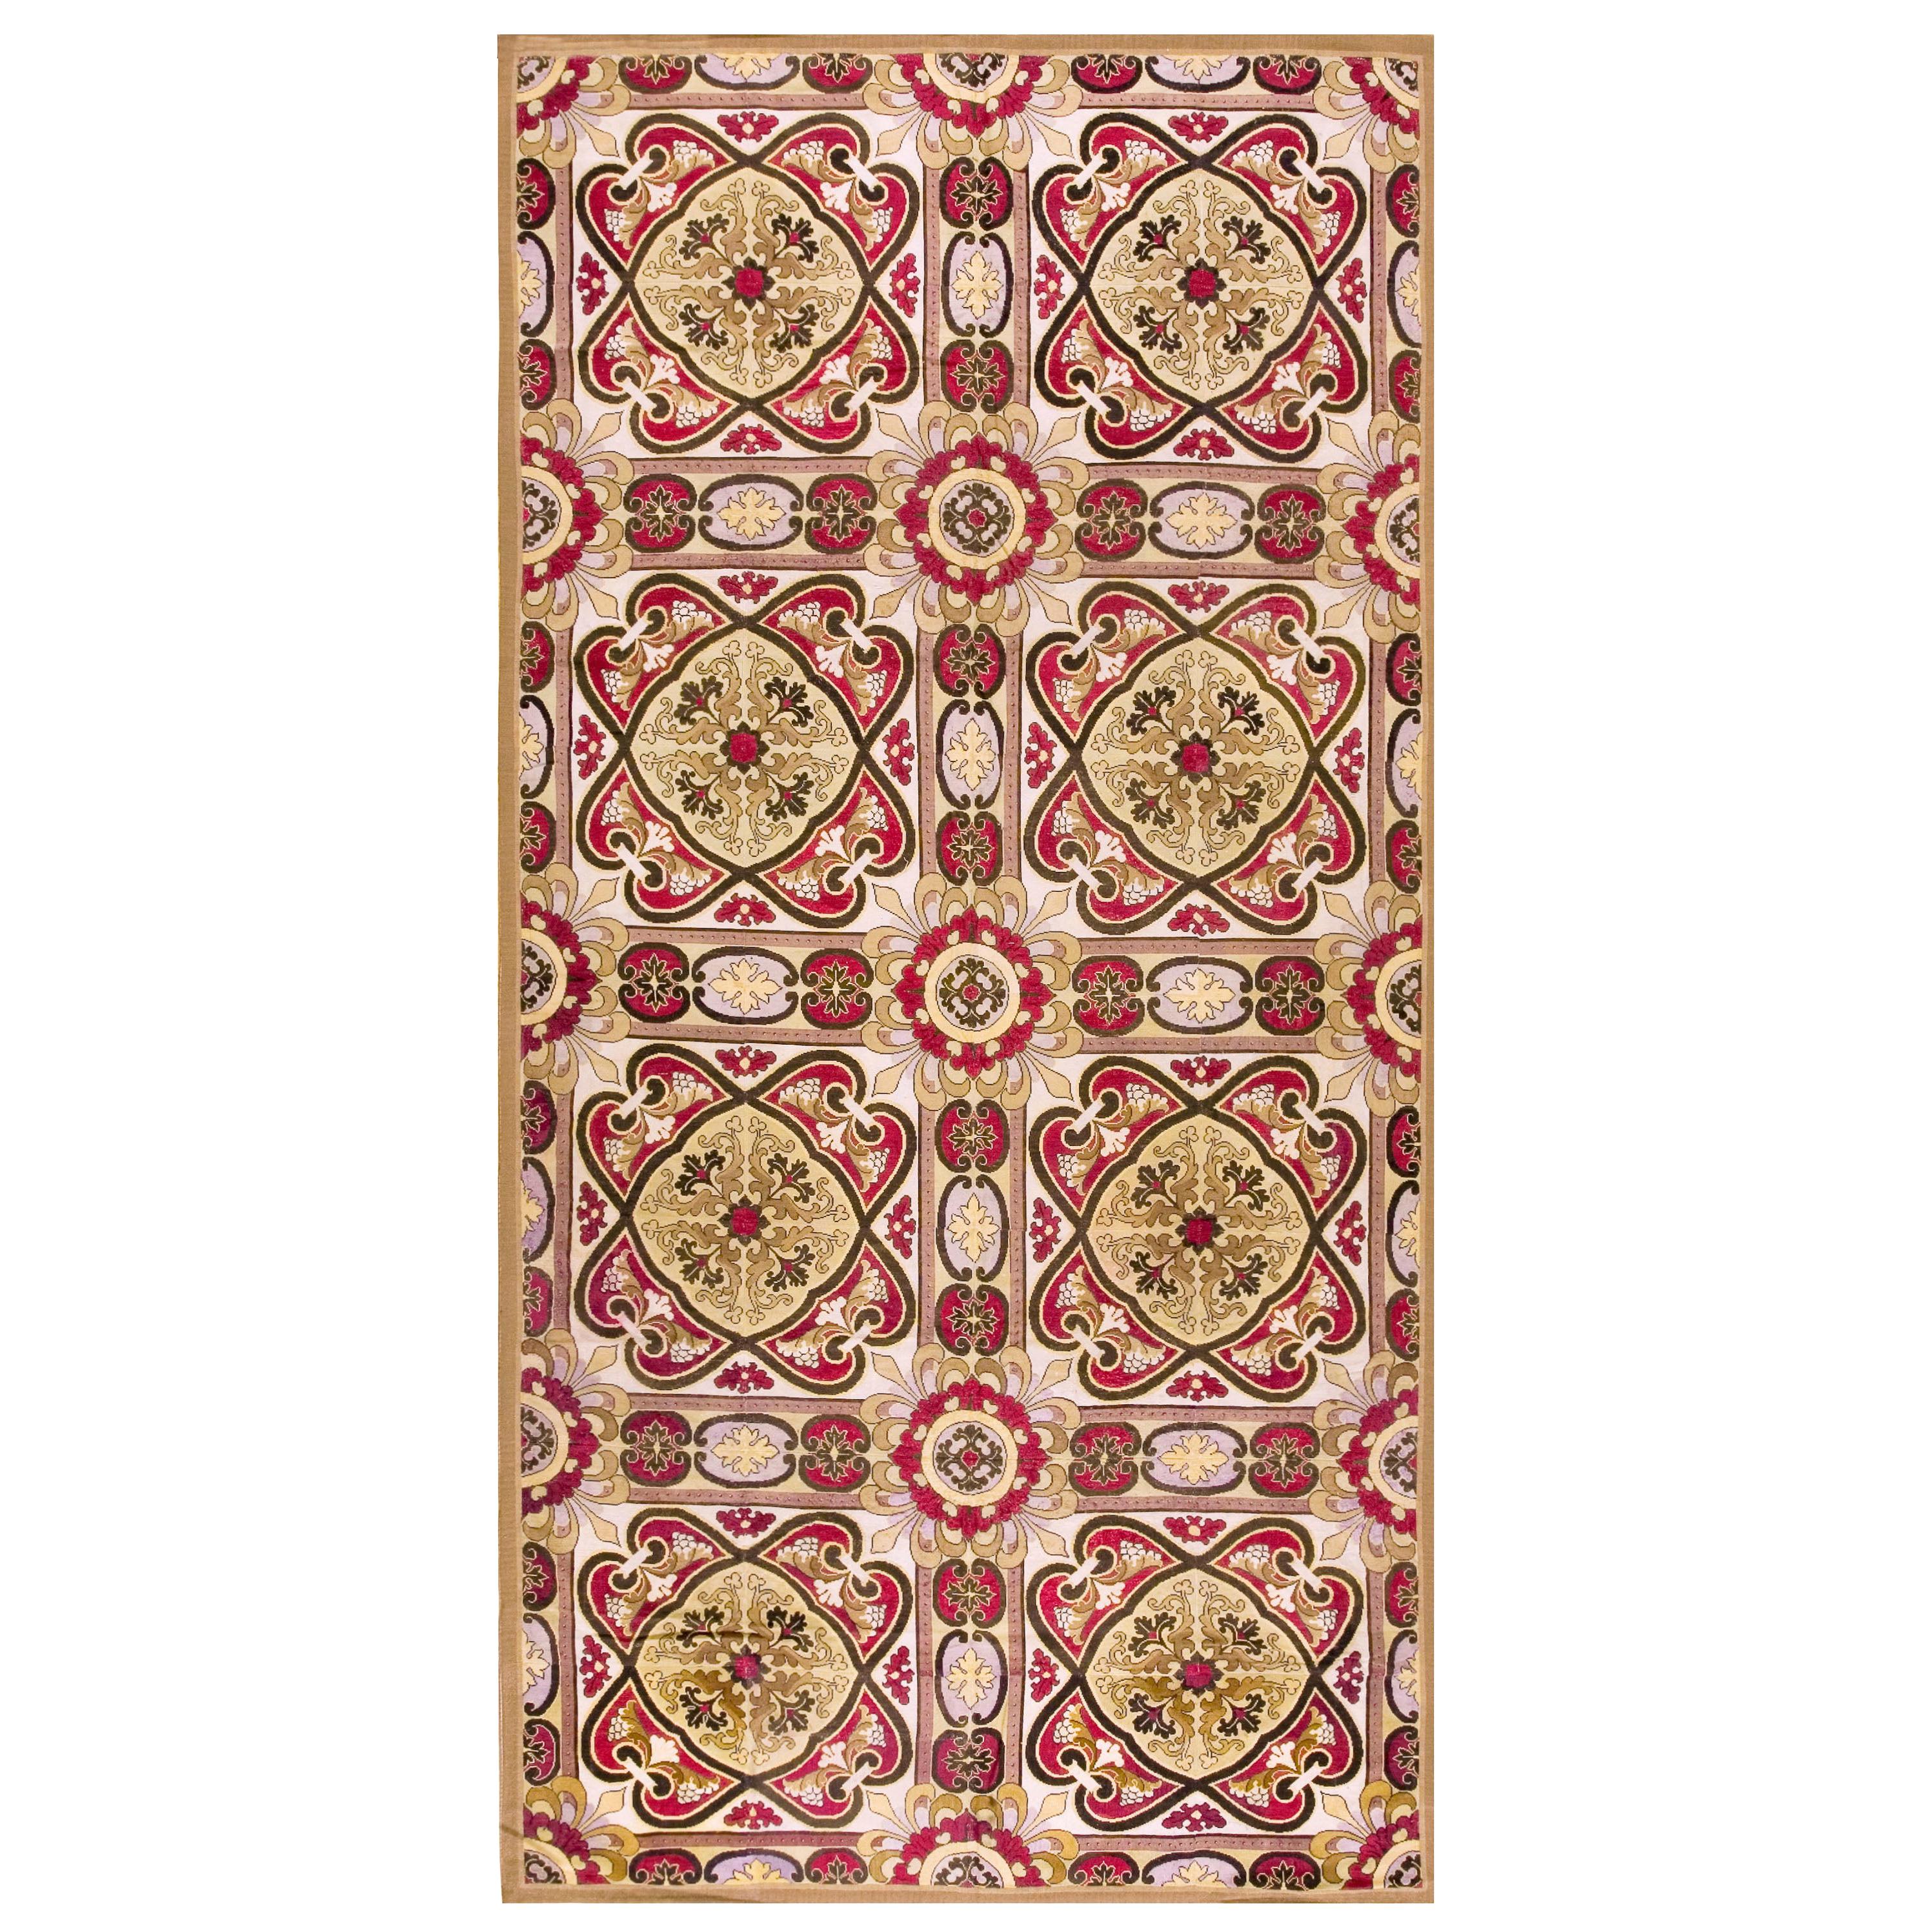 19th Century English Needlepoint Carpet ( 6'4" x 13'6" - 193 x 412 )